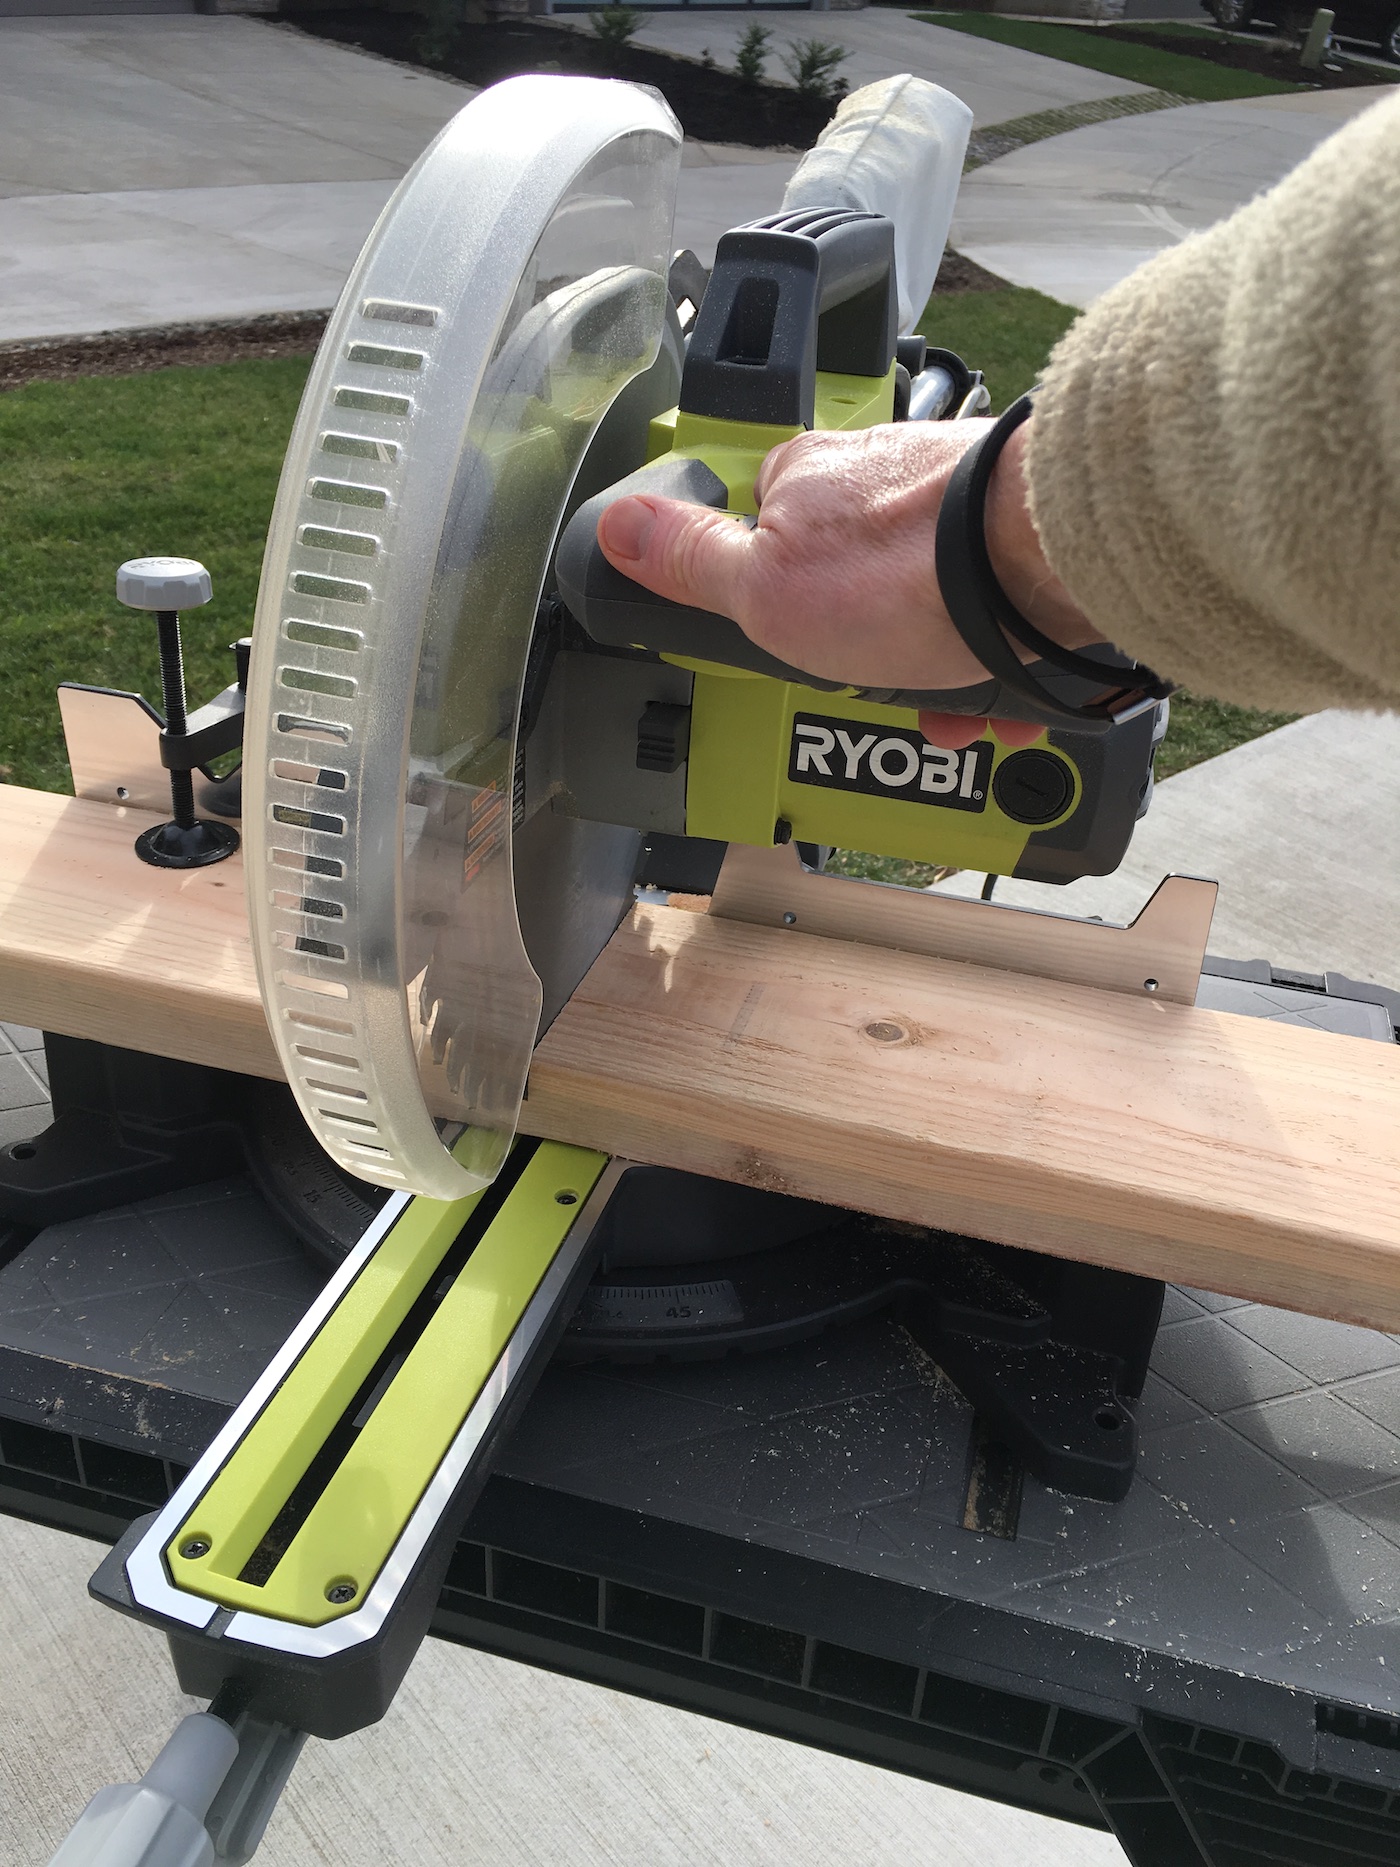 Cutting a wood board with a Ryobi circular saw